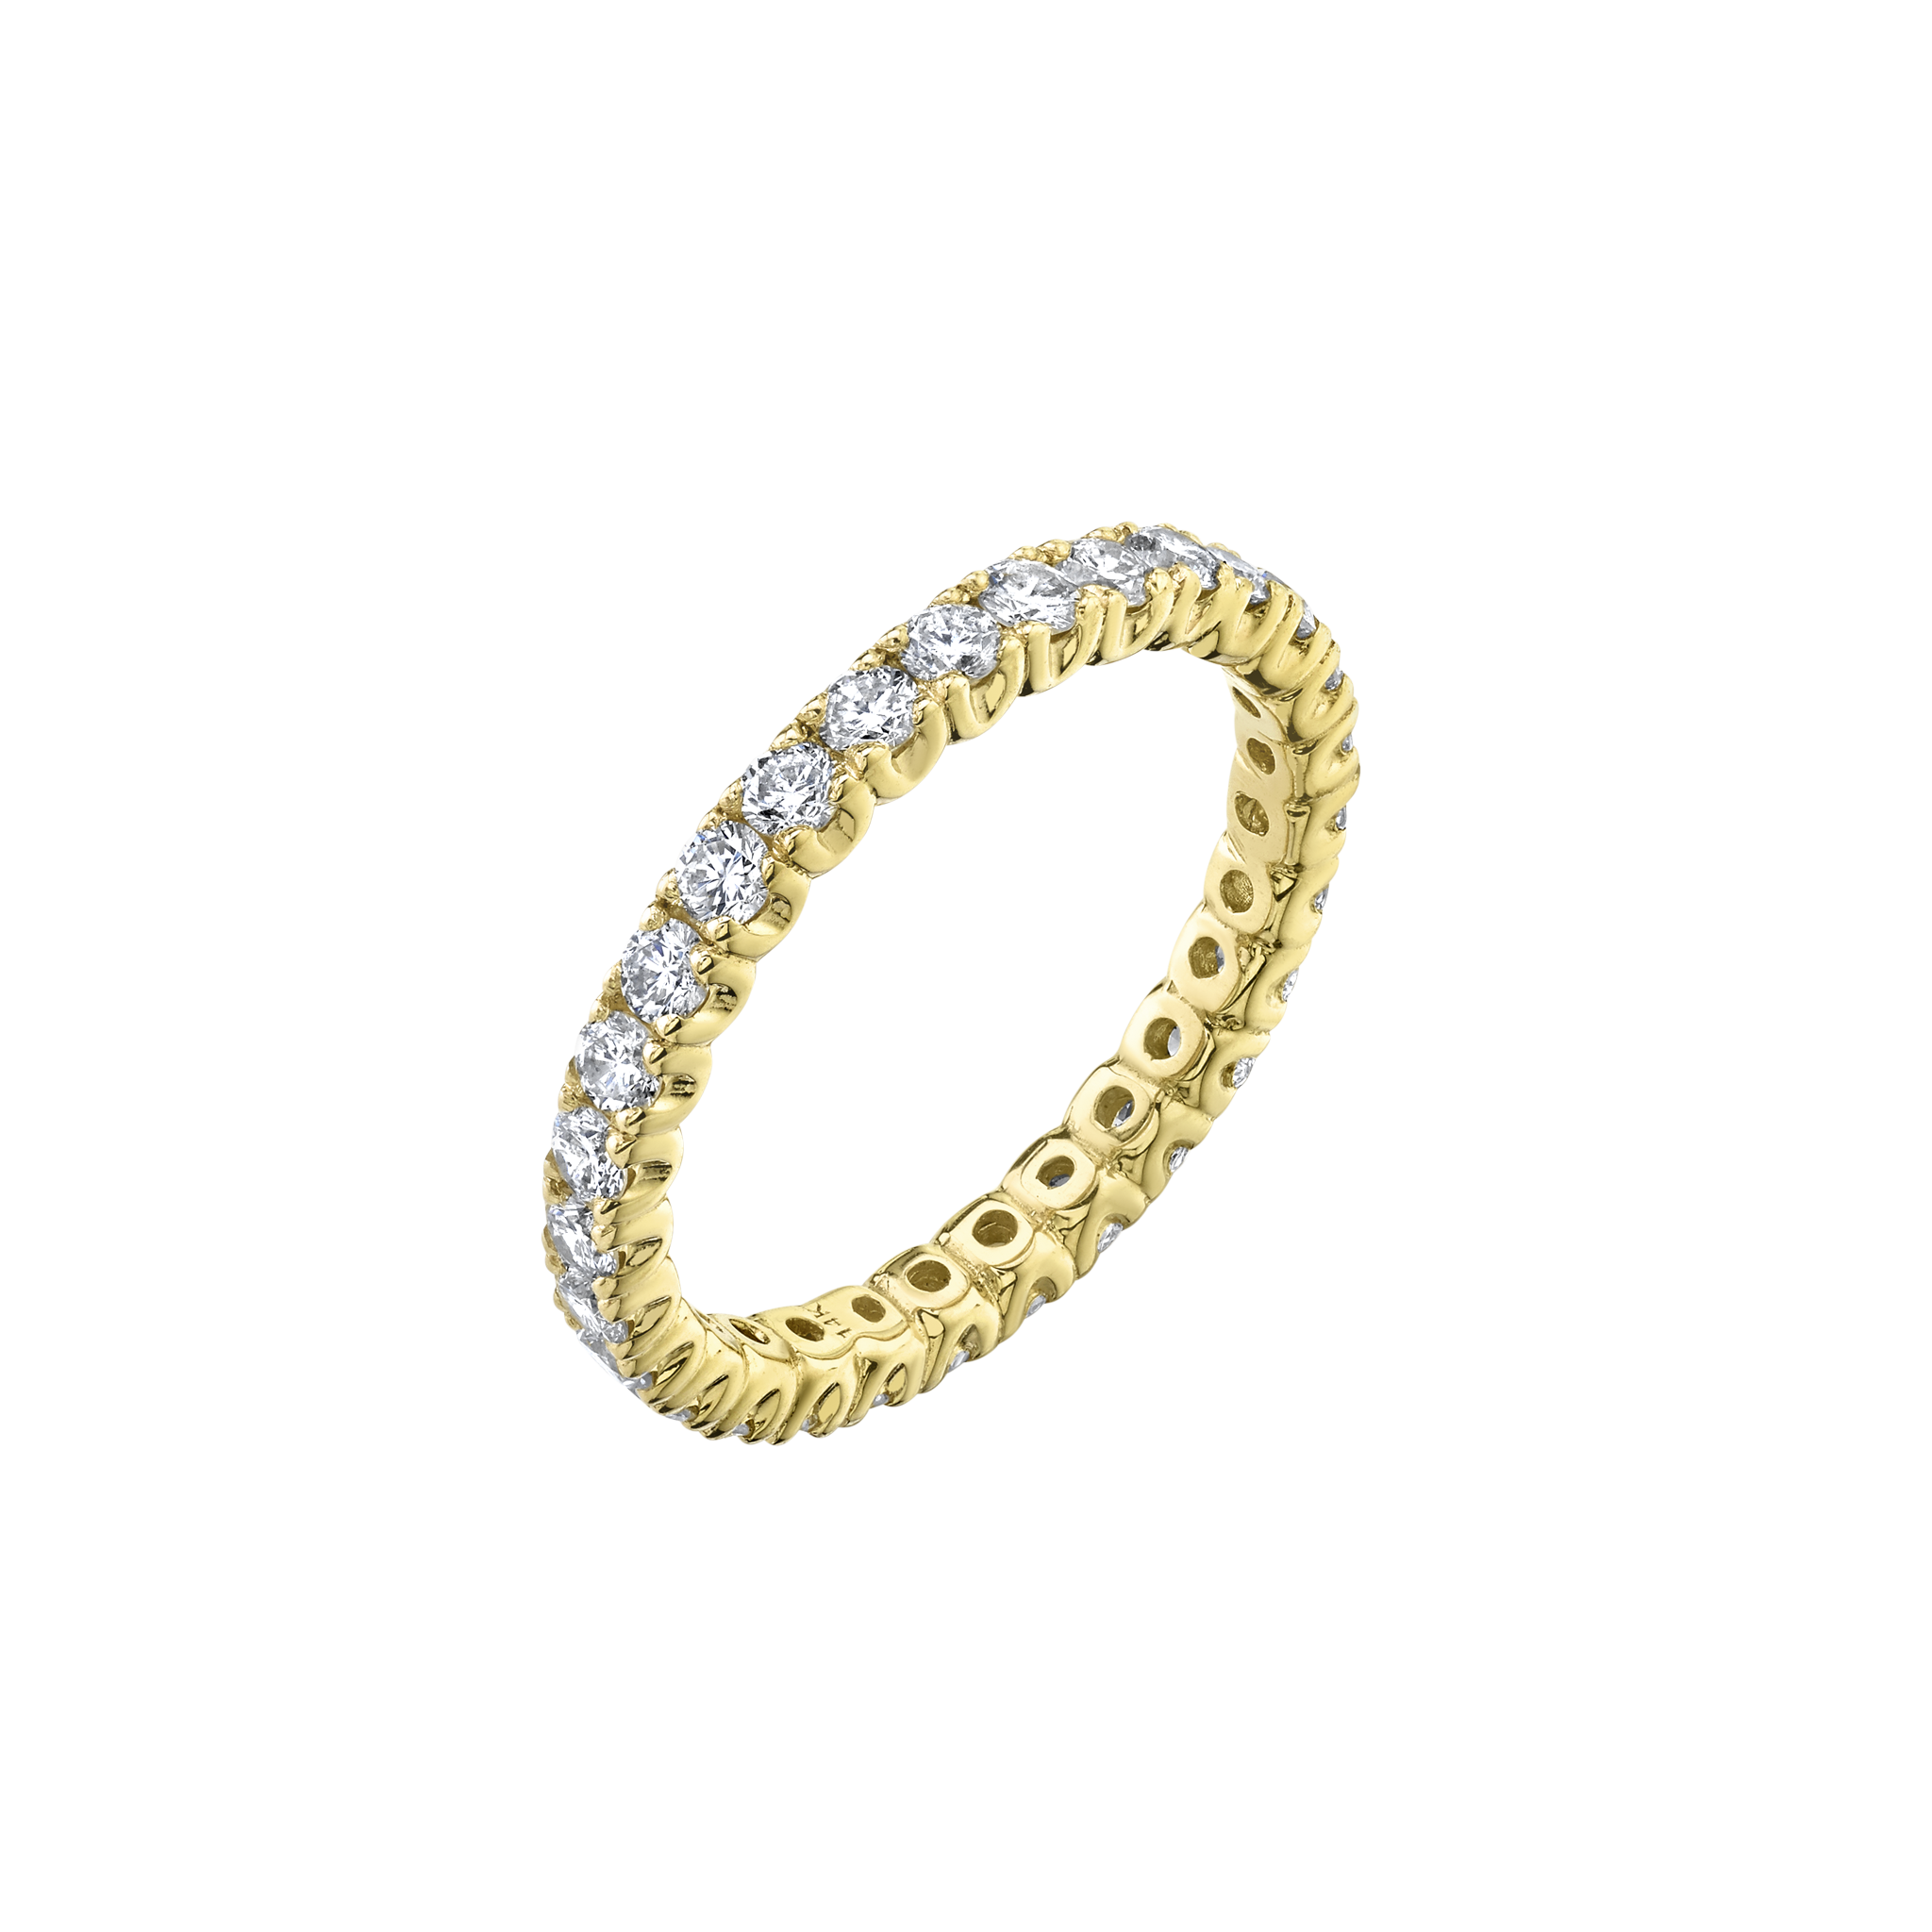 Queen Axis Ring with White Diamonds - Gabriela Artigas